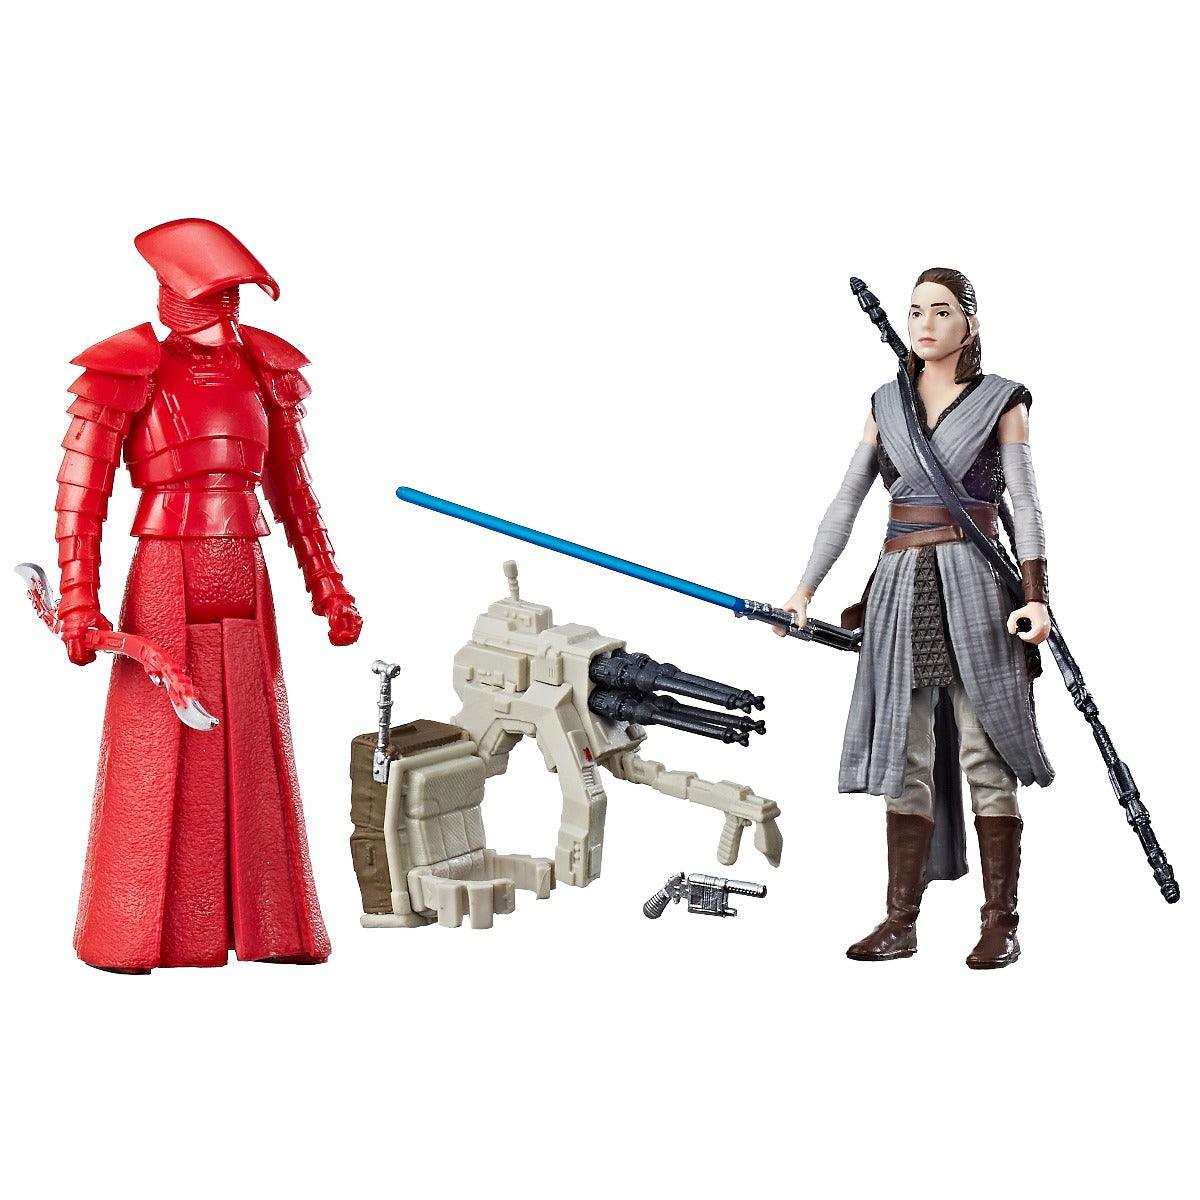 Star Wars: The Last Jedi Rey (Jedi Training) and Elite Praetorian Guard Figure 2-Pack 3.75 Inches